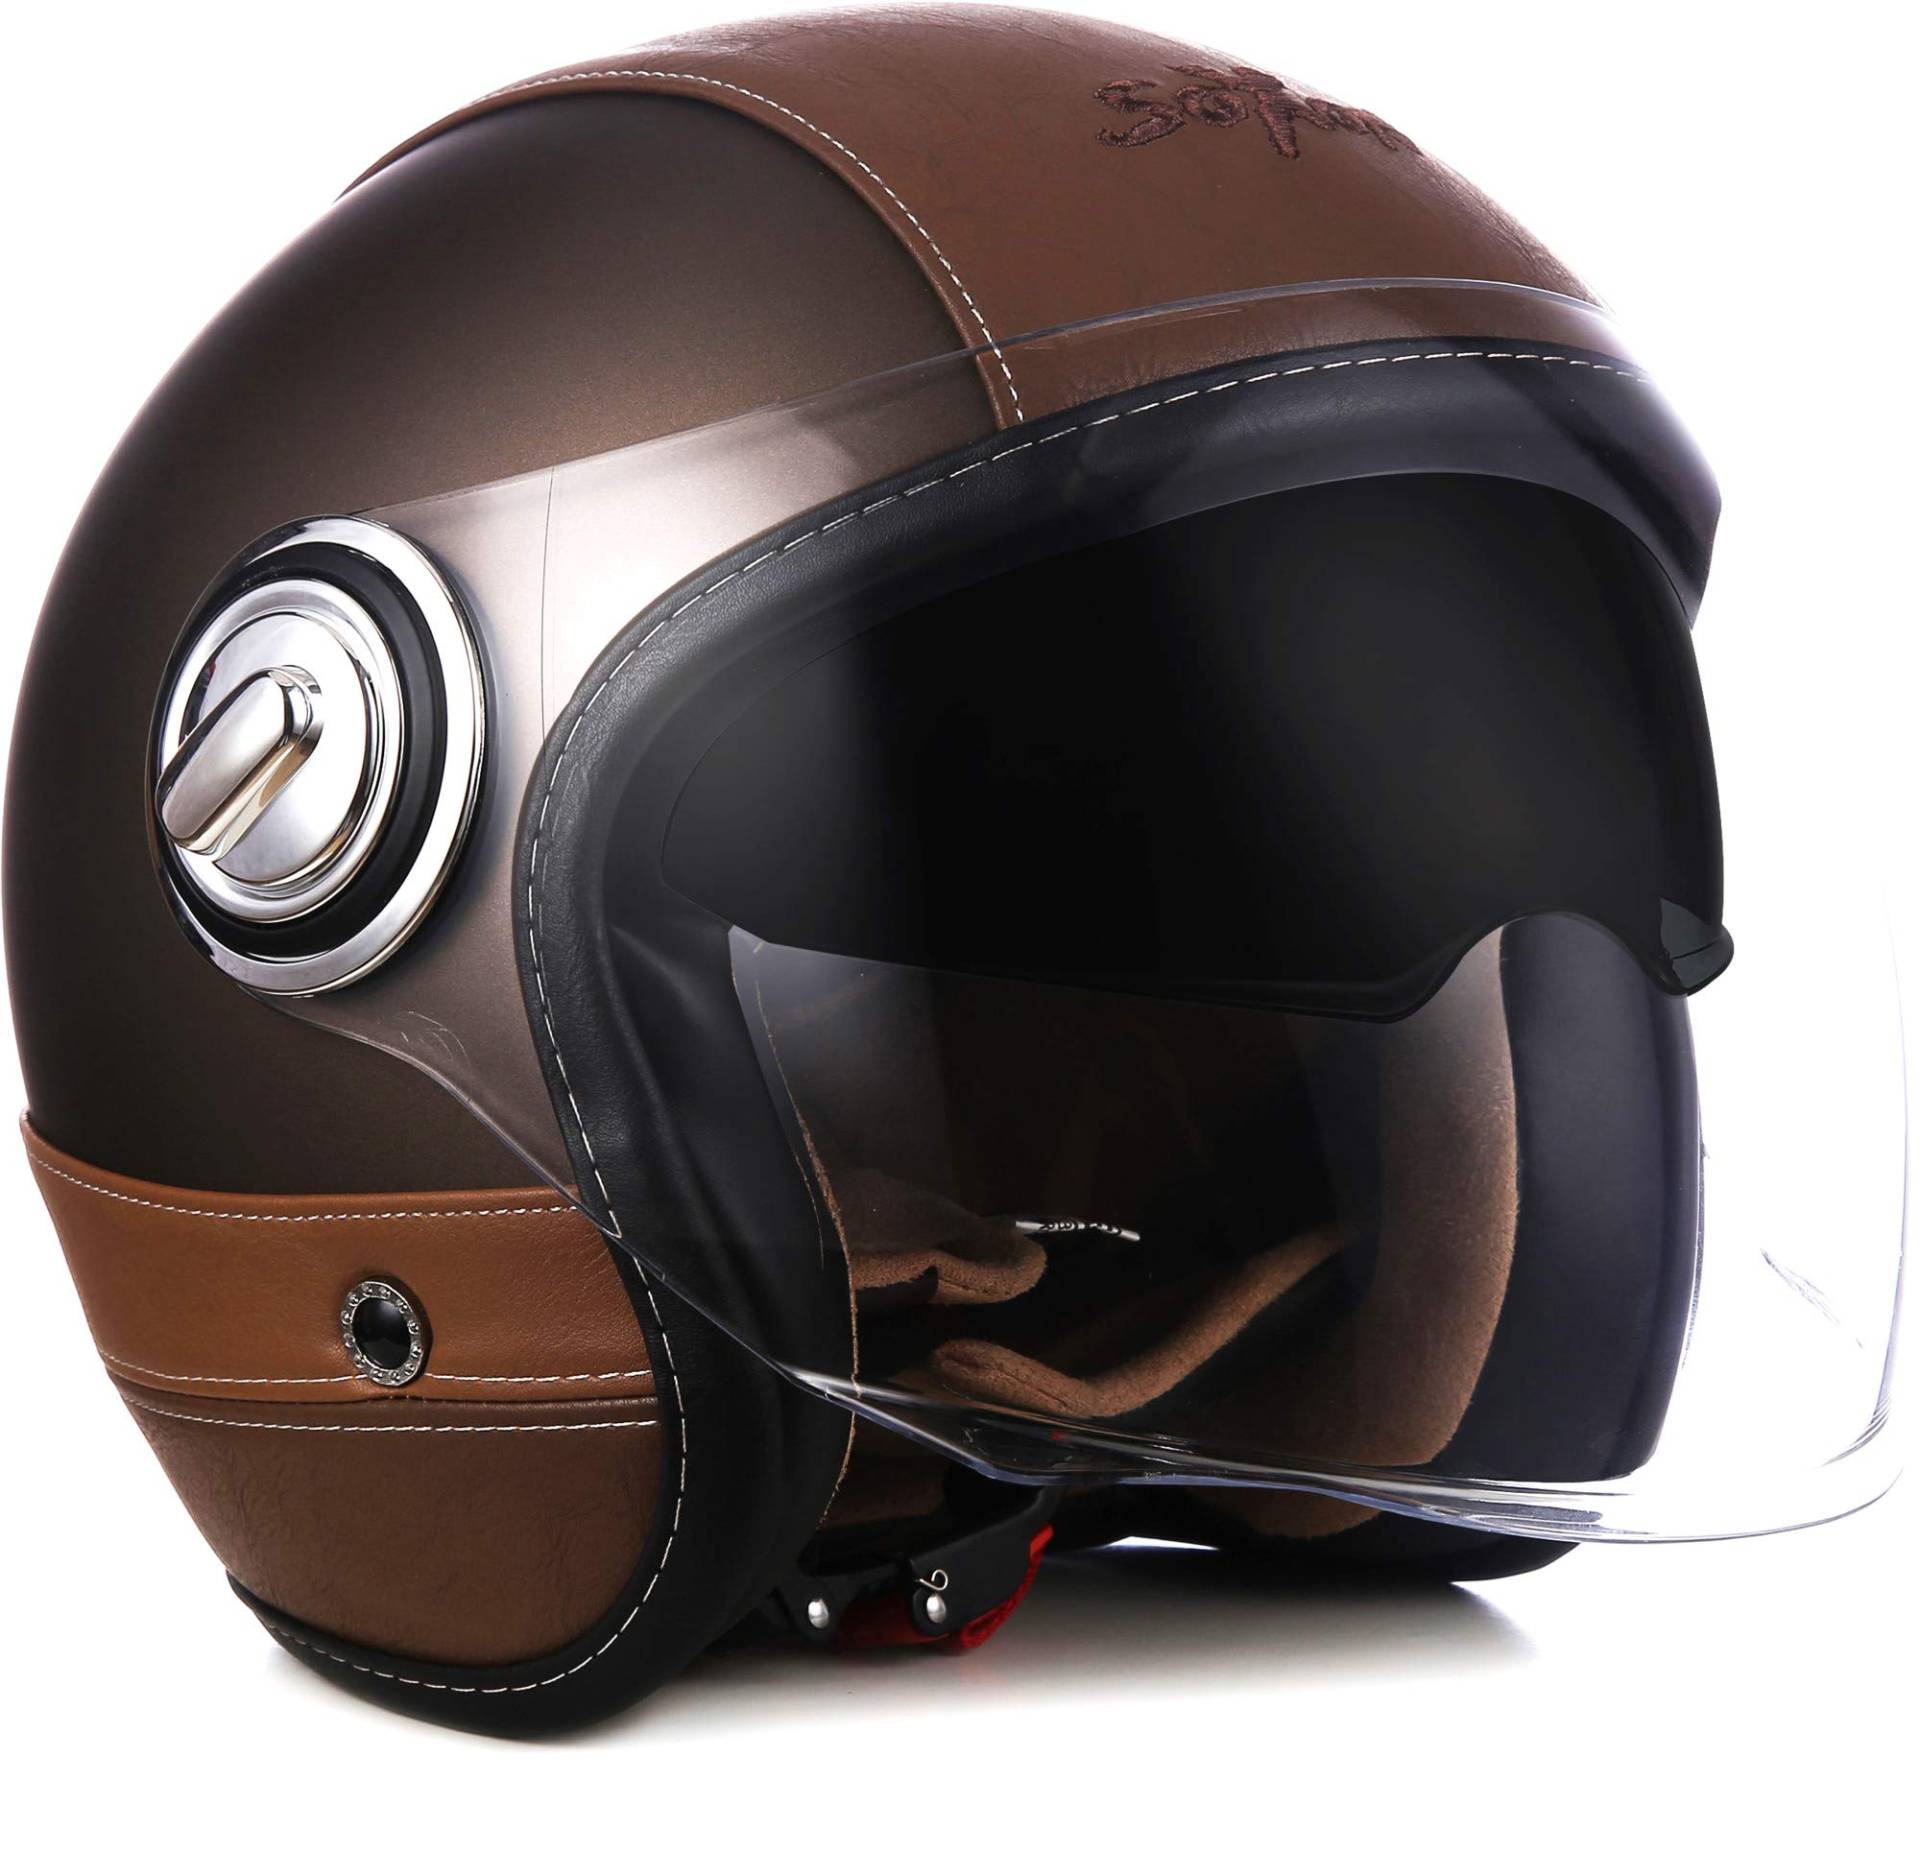 Soxon® SP-888 Pro „Urban Bronze“ · Jet-Helm · Motorrad-Helm Roller-Helm Scooter-Helm Moped Mofa-Helm Chopper · ECE 22.05 Sonnenvisier Leather-Design Schnellverschluss SlimShell Tasche S (55-56cm) von Soxon